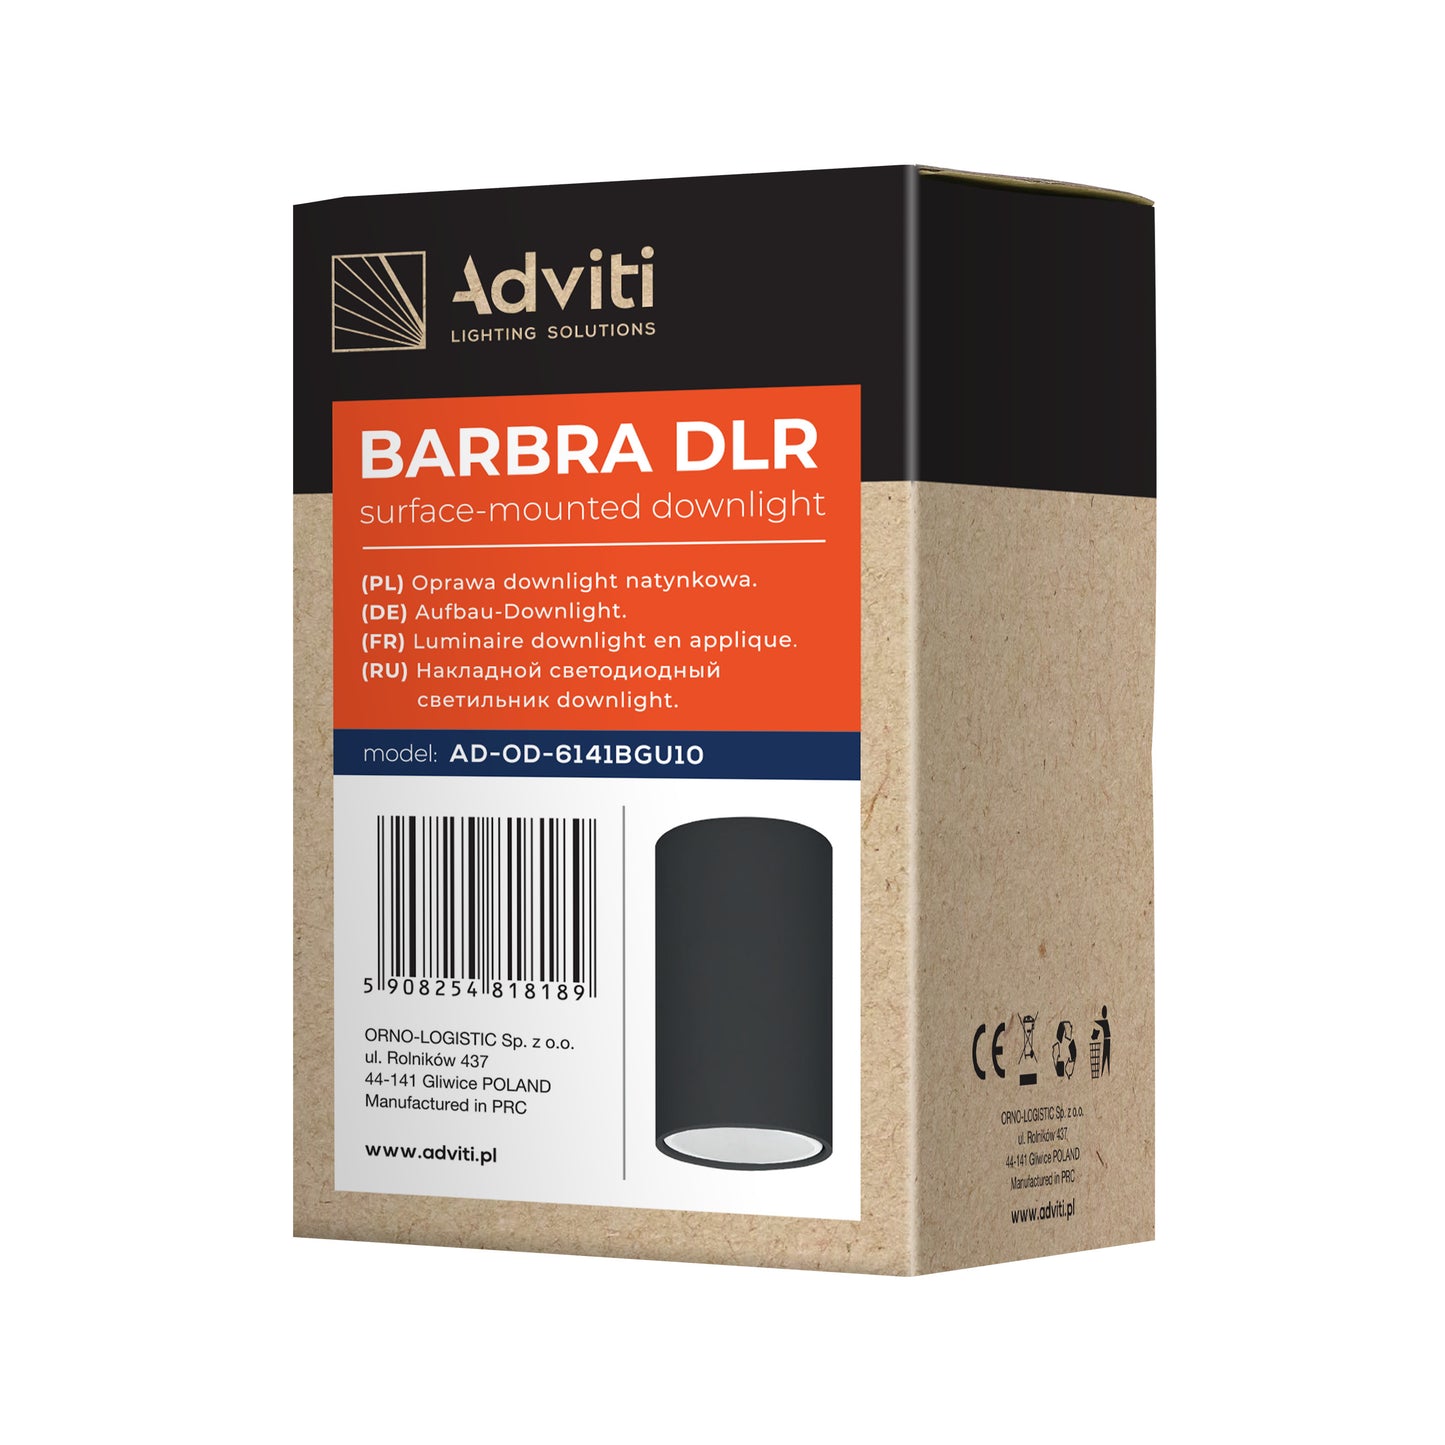 BARBRA DLR GU10 Aufbau-Downlight max 50W, IP20, rund, schwarz, Aluminium